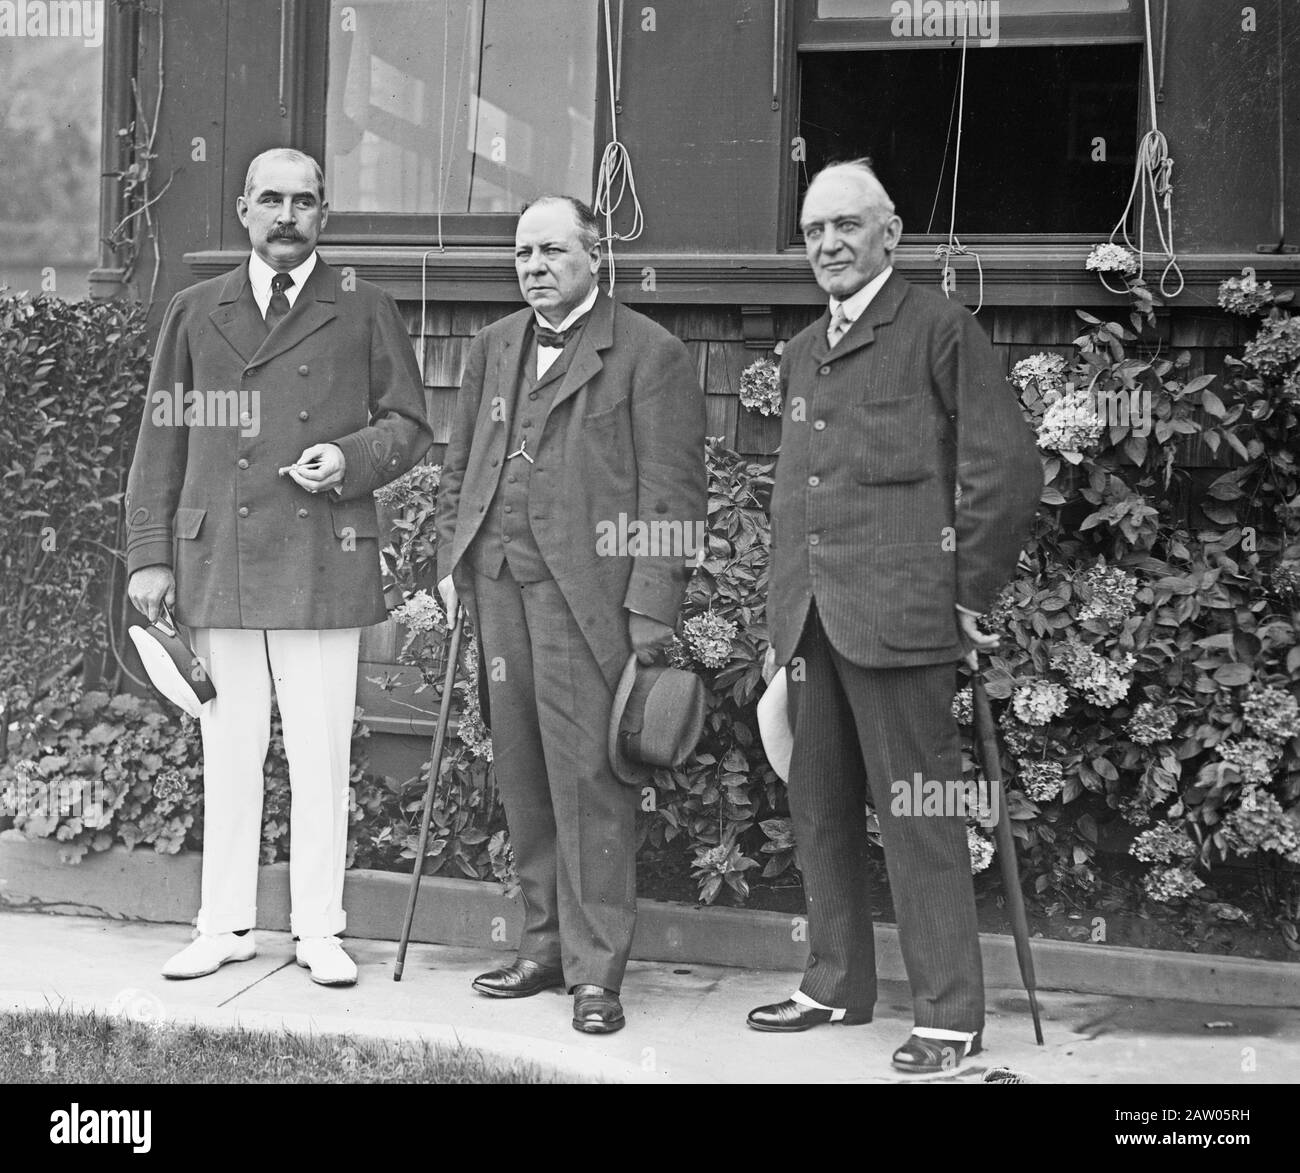 Photo shows J.P. Morgan, Jr., Richard Burdon Sanderson Haldane, 1st Viscount Haldane (1856-1928) and Kenneth Muir Mackenzie (1845-1930) at the U.S. Military Academy, West Point, New York State, August 30, 1913. Stock Photo